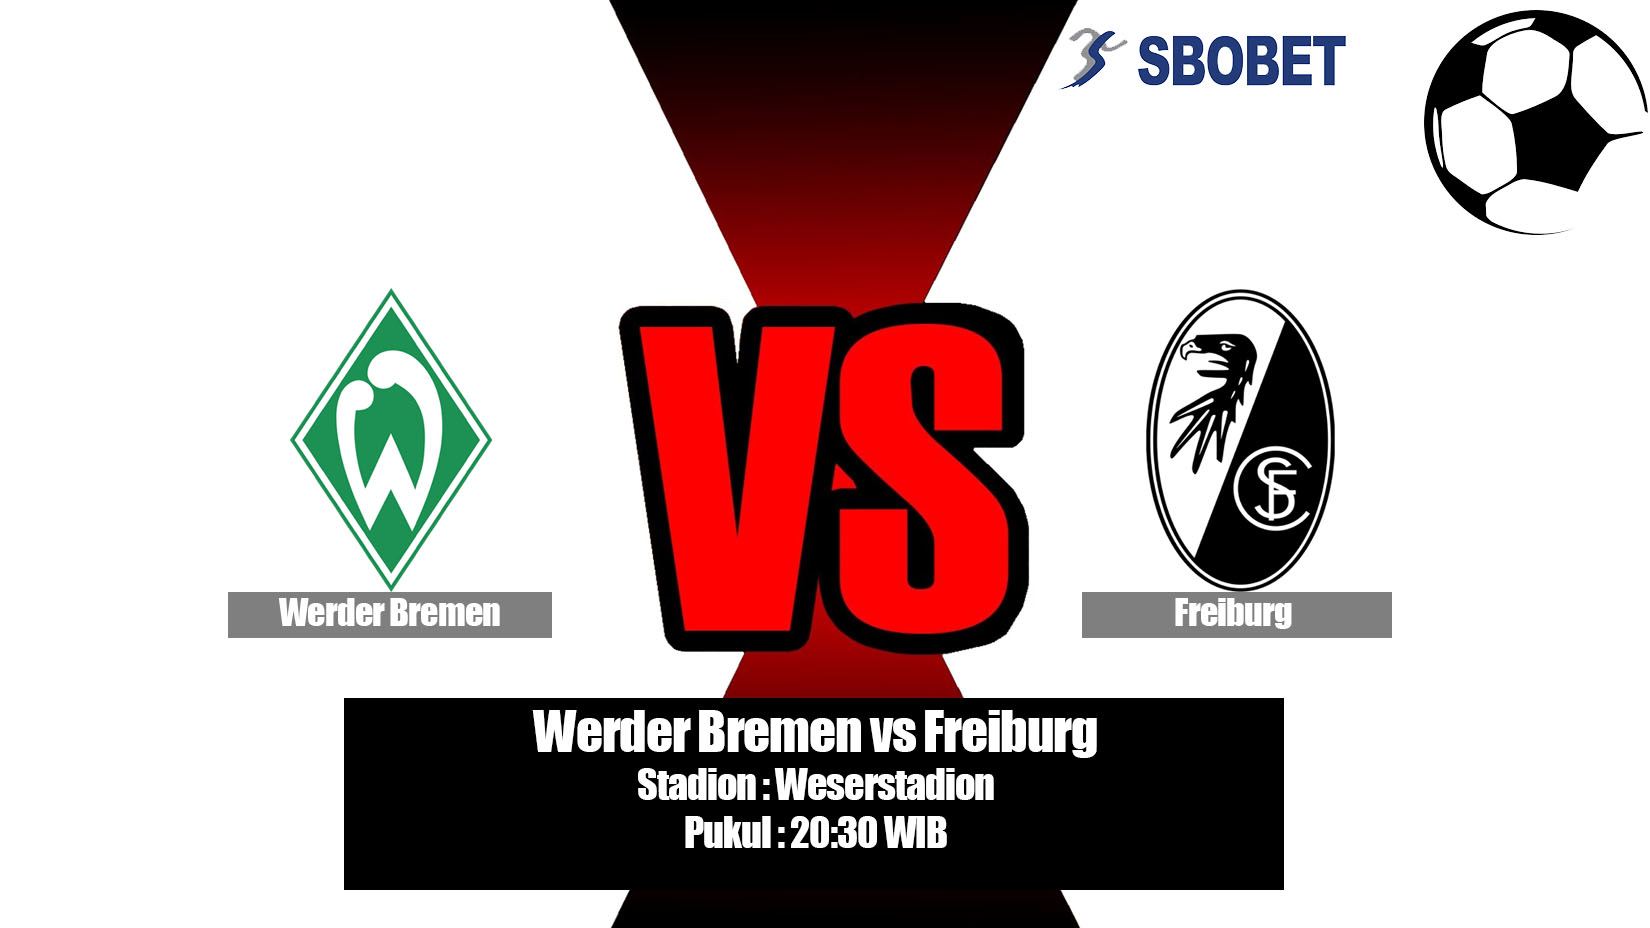 Prediksi Bola Werder Bremen vs Freiburg 13 April 2019